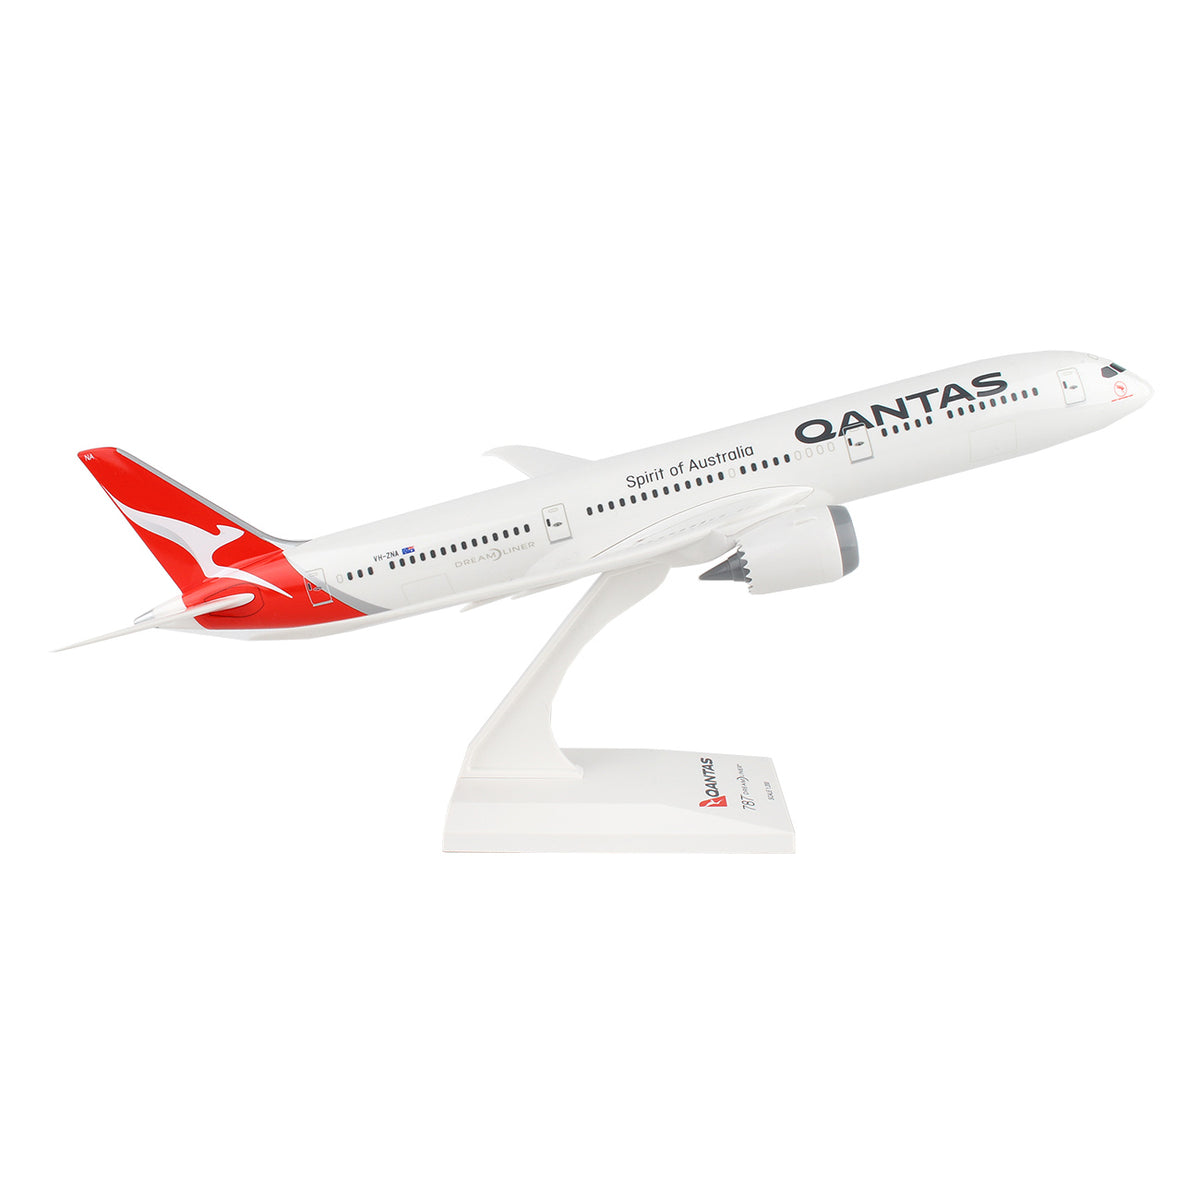 Qantas airline remove before flight keyring keychain australia 